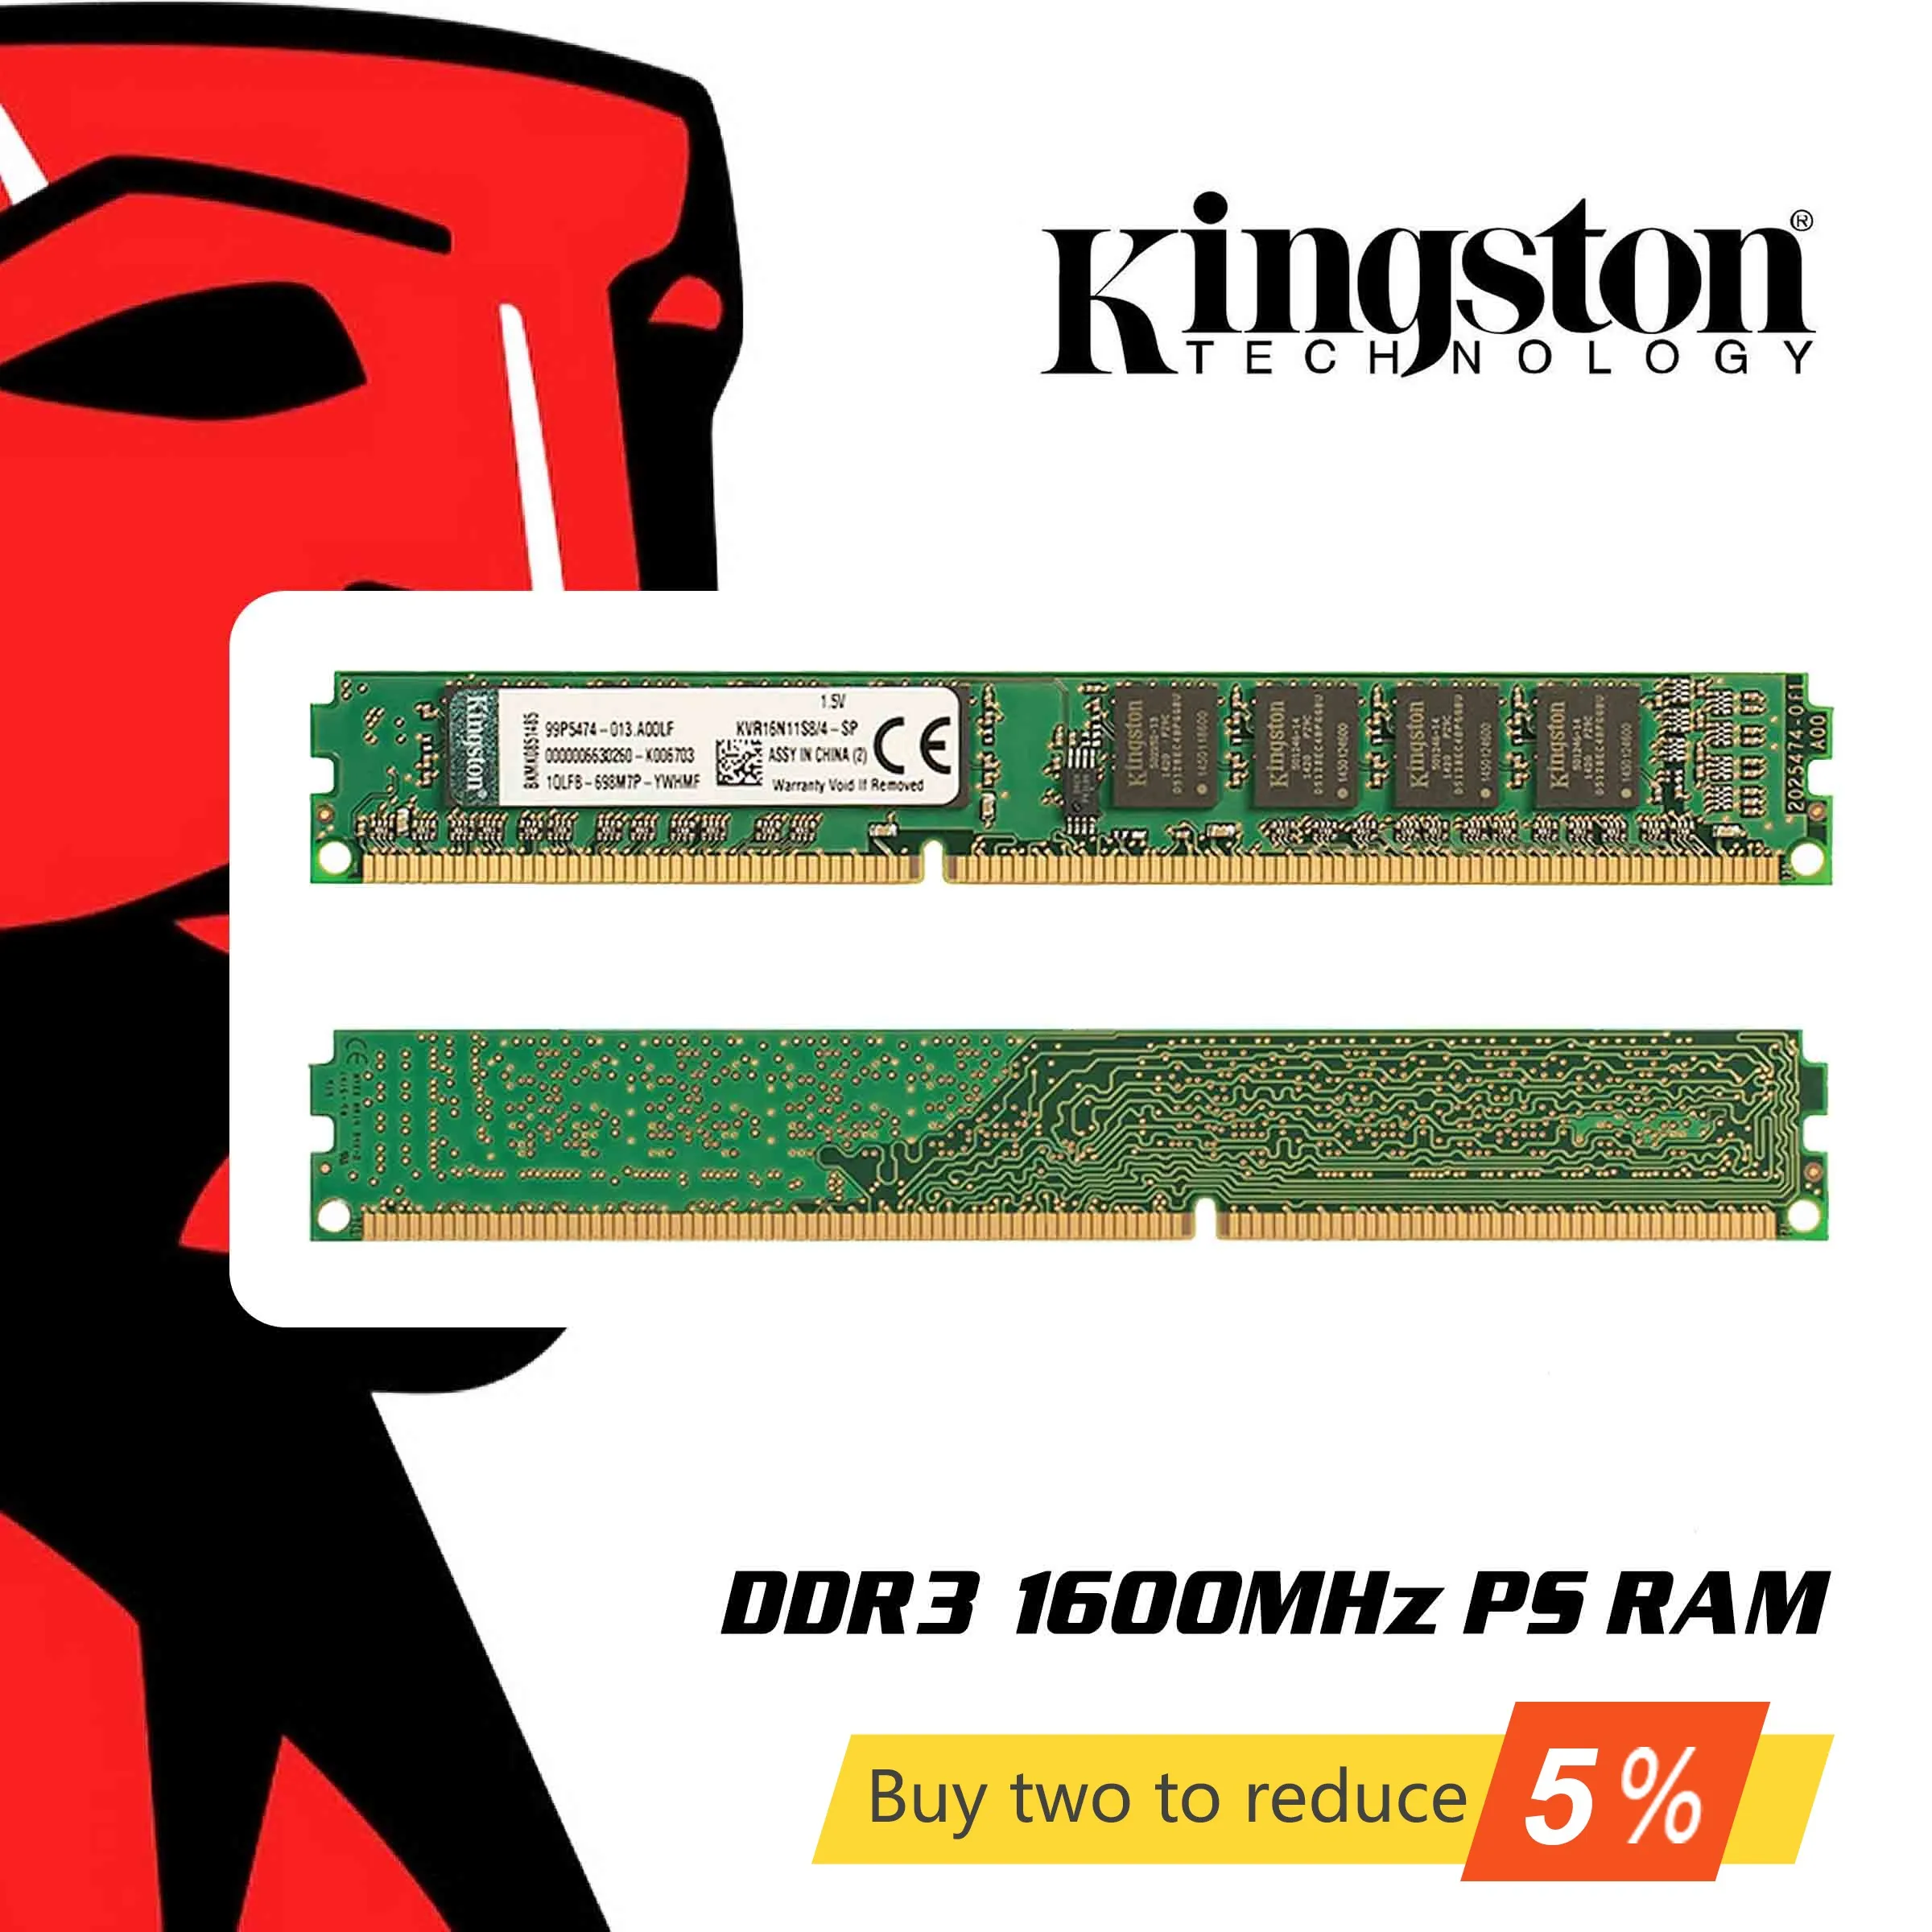 

Original Kingston RAM Memory DDR3 1600MHZ 4GB 8GB Memoria RAMs 1600 MHz 8 Gigabytes Gigs Stick for Desktop Laptop PC Notebook